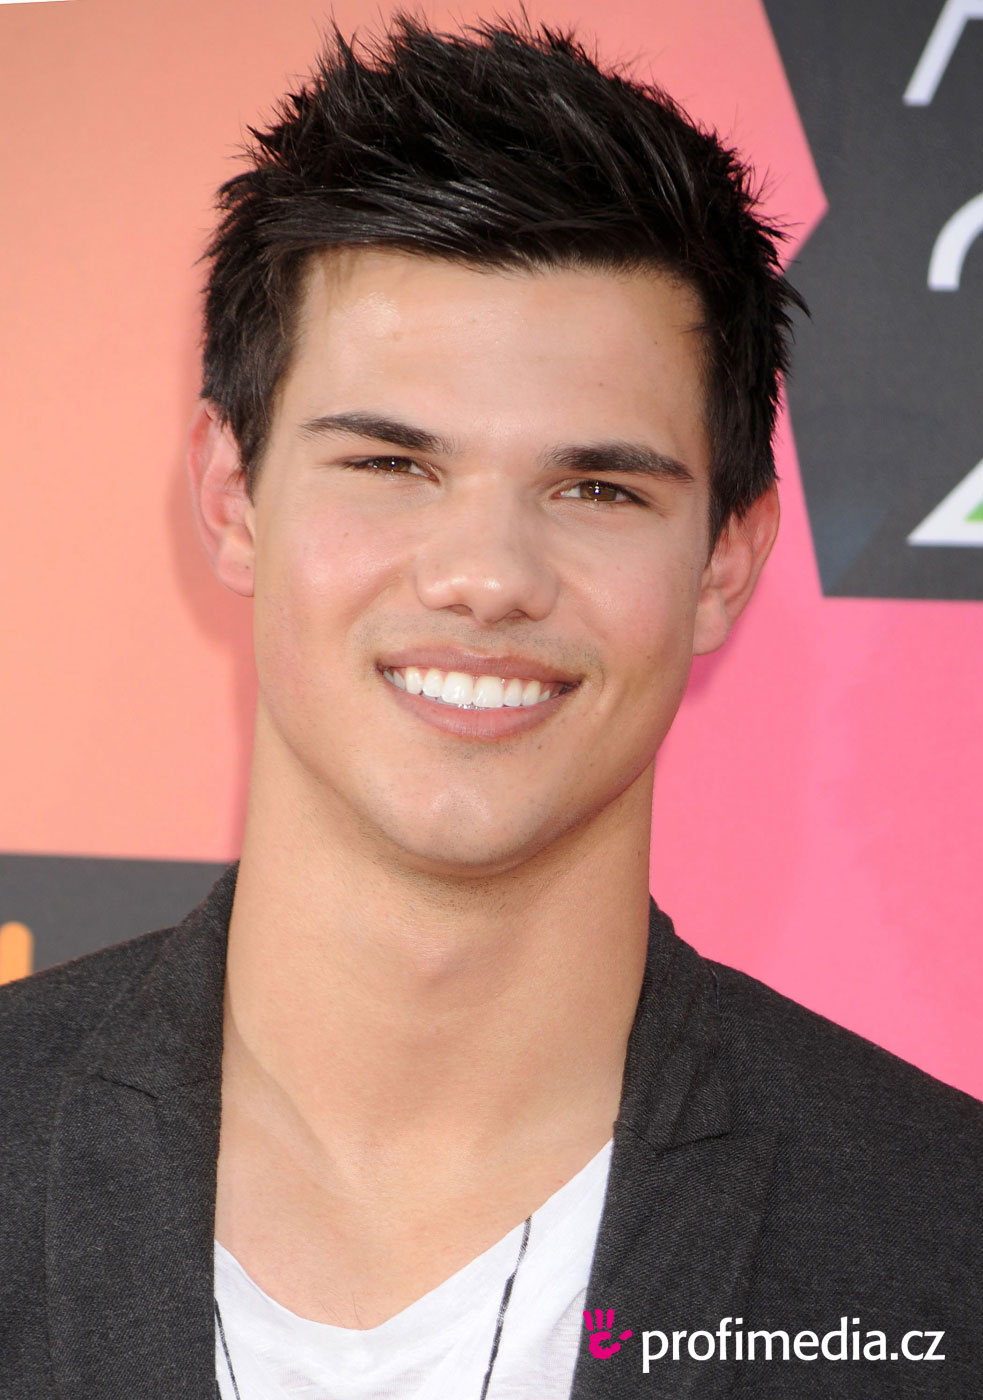 Taylor Lautner Hairstyle Easyhairstyler.